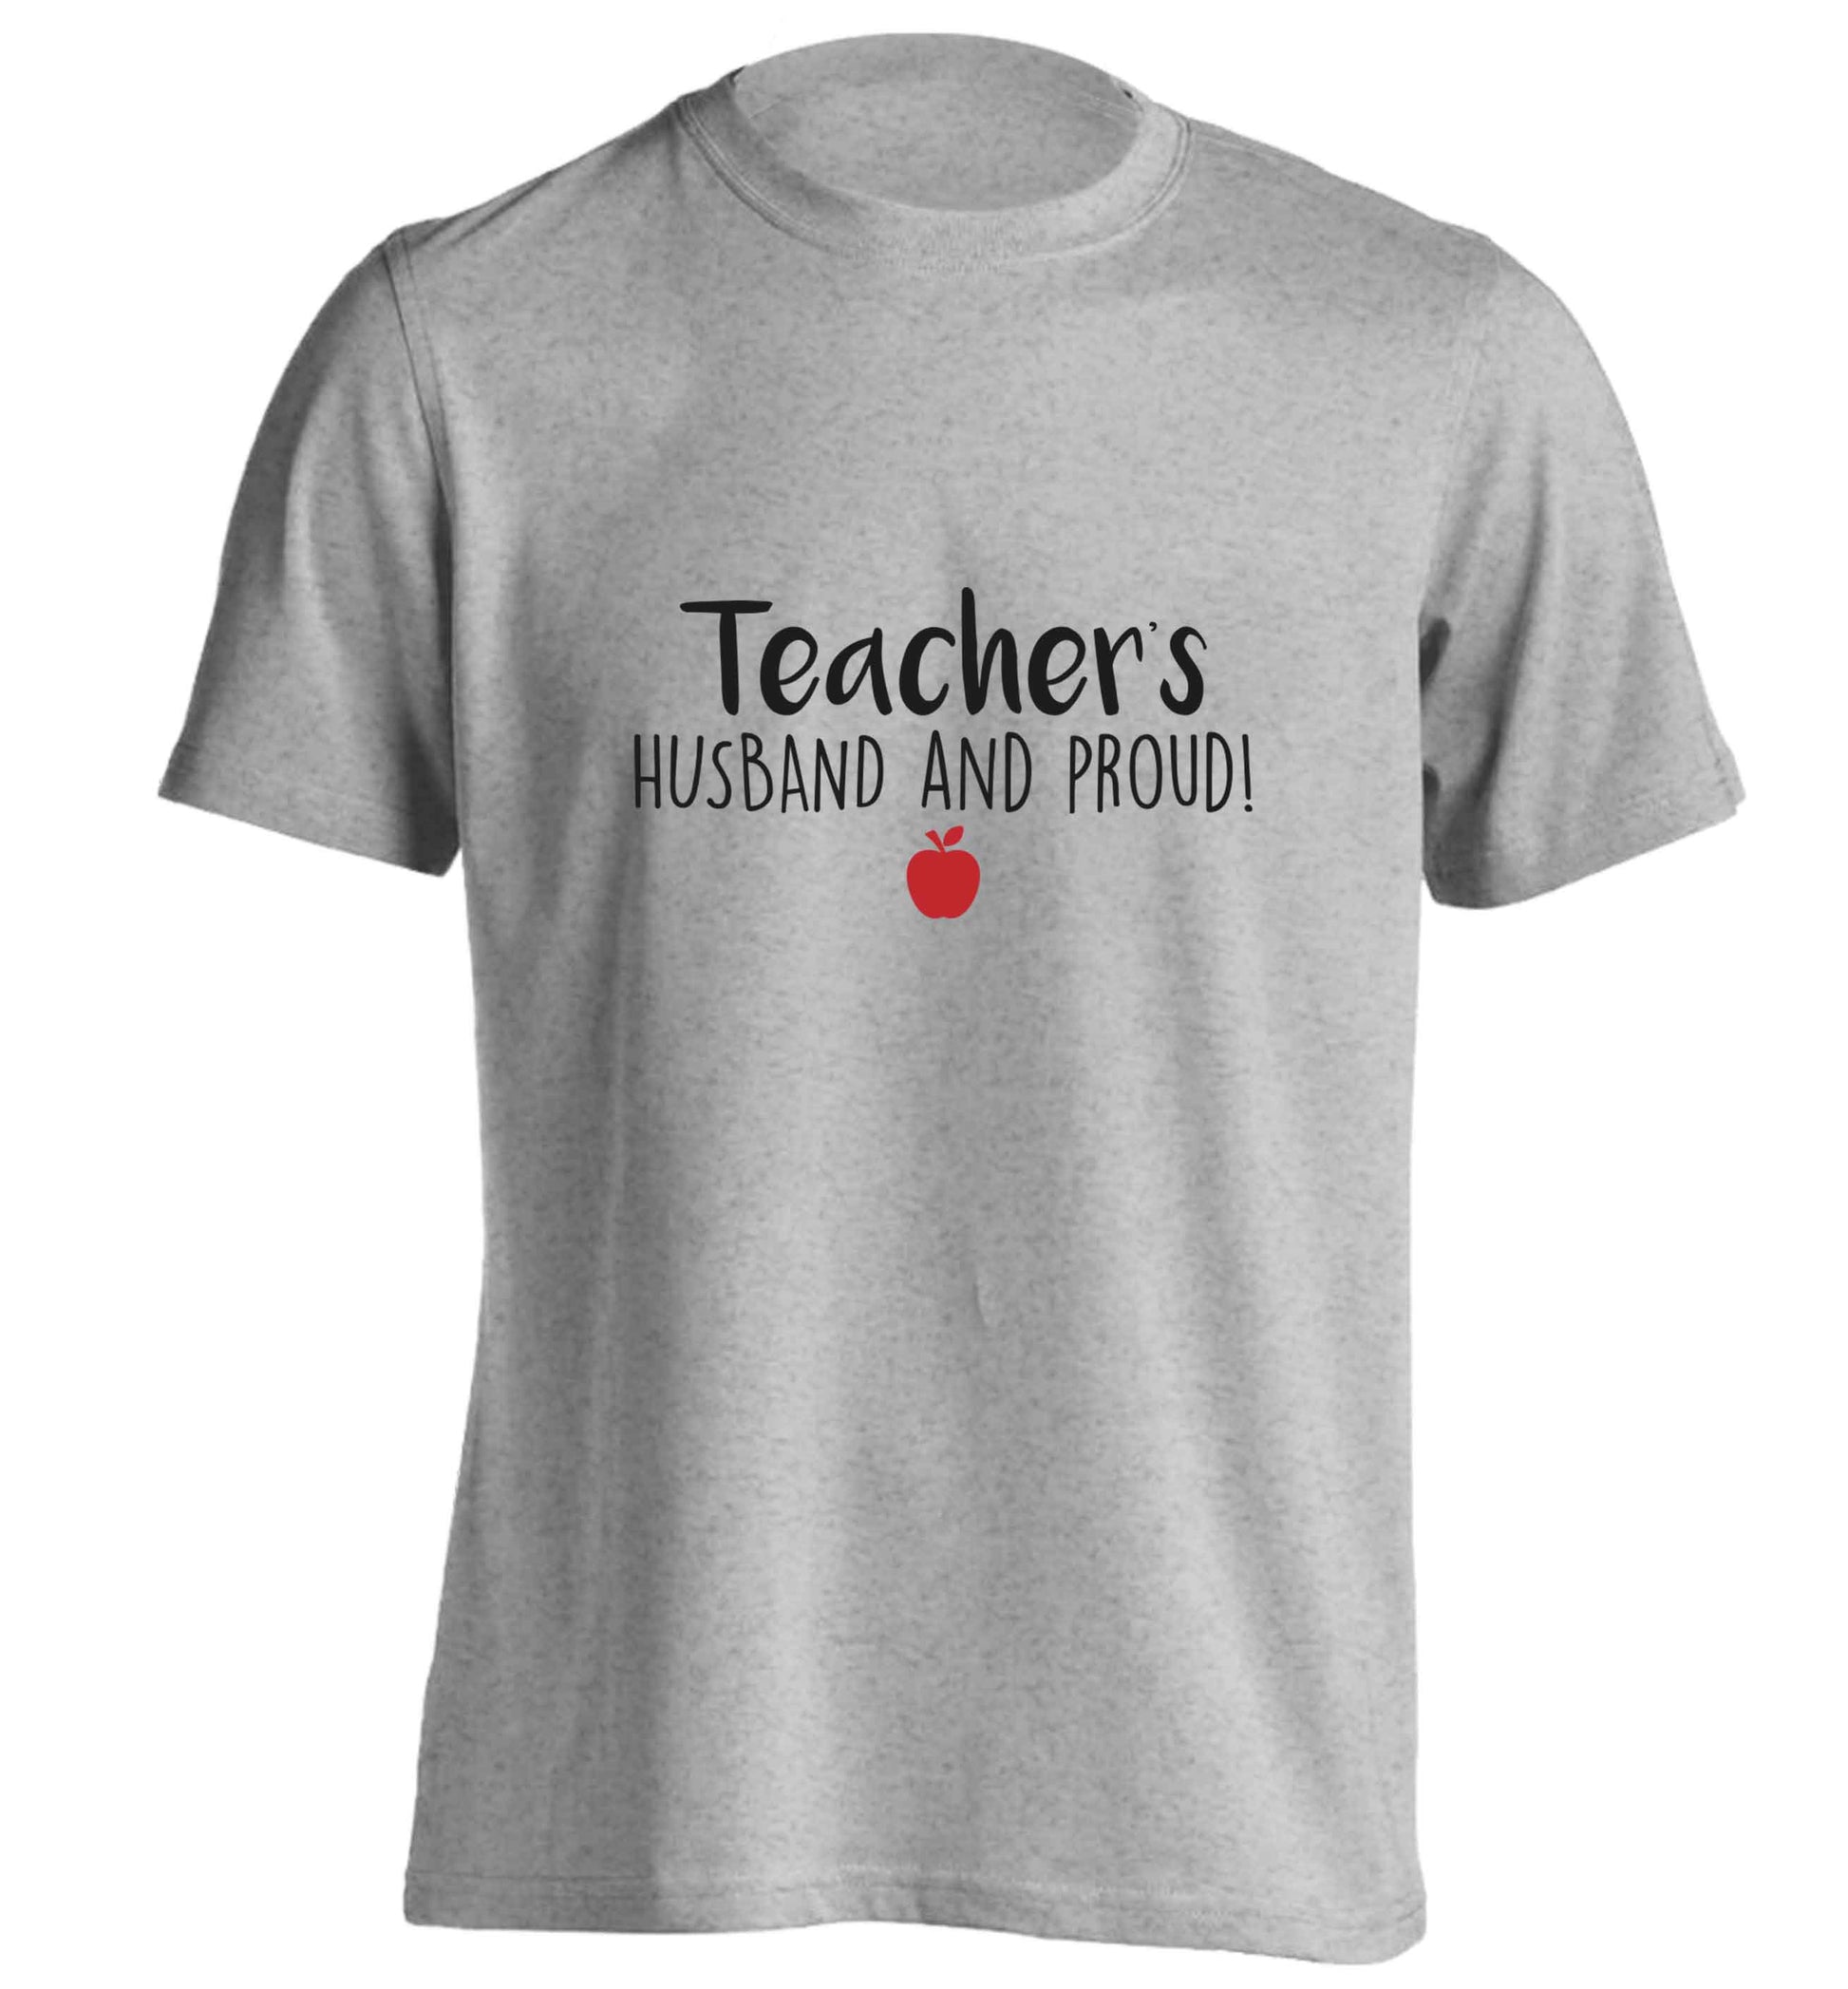 Teachers husband and proud adults unisex grey Tshirt 2XL